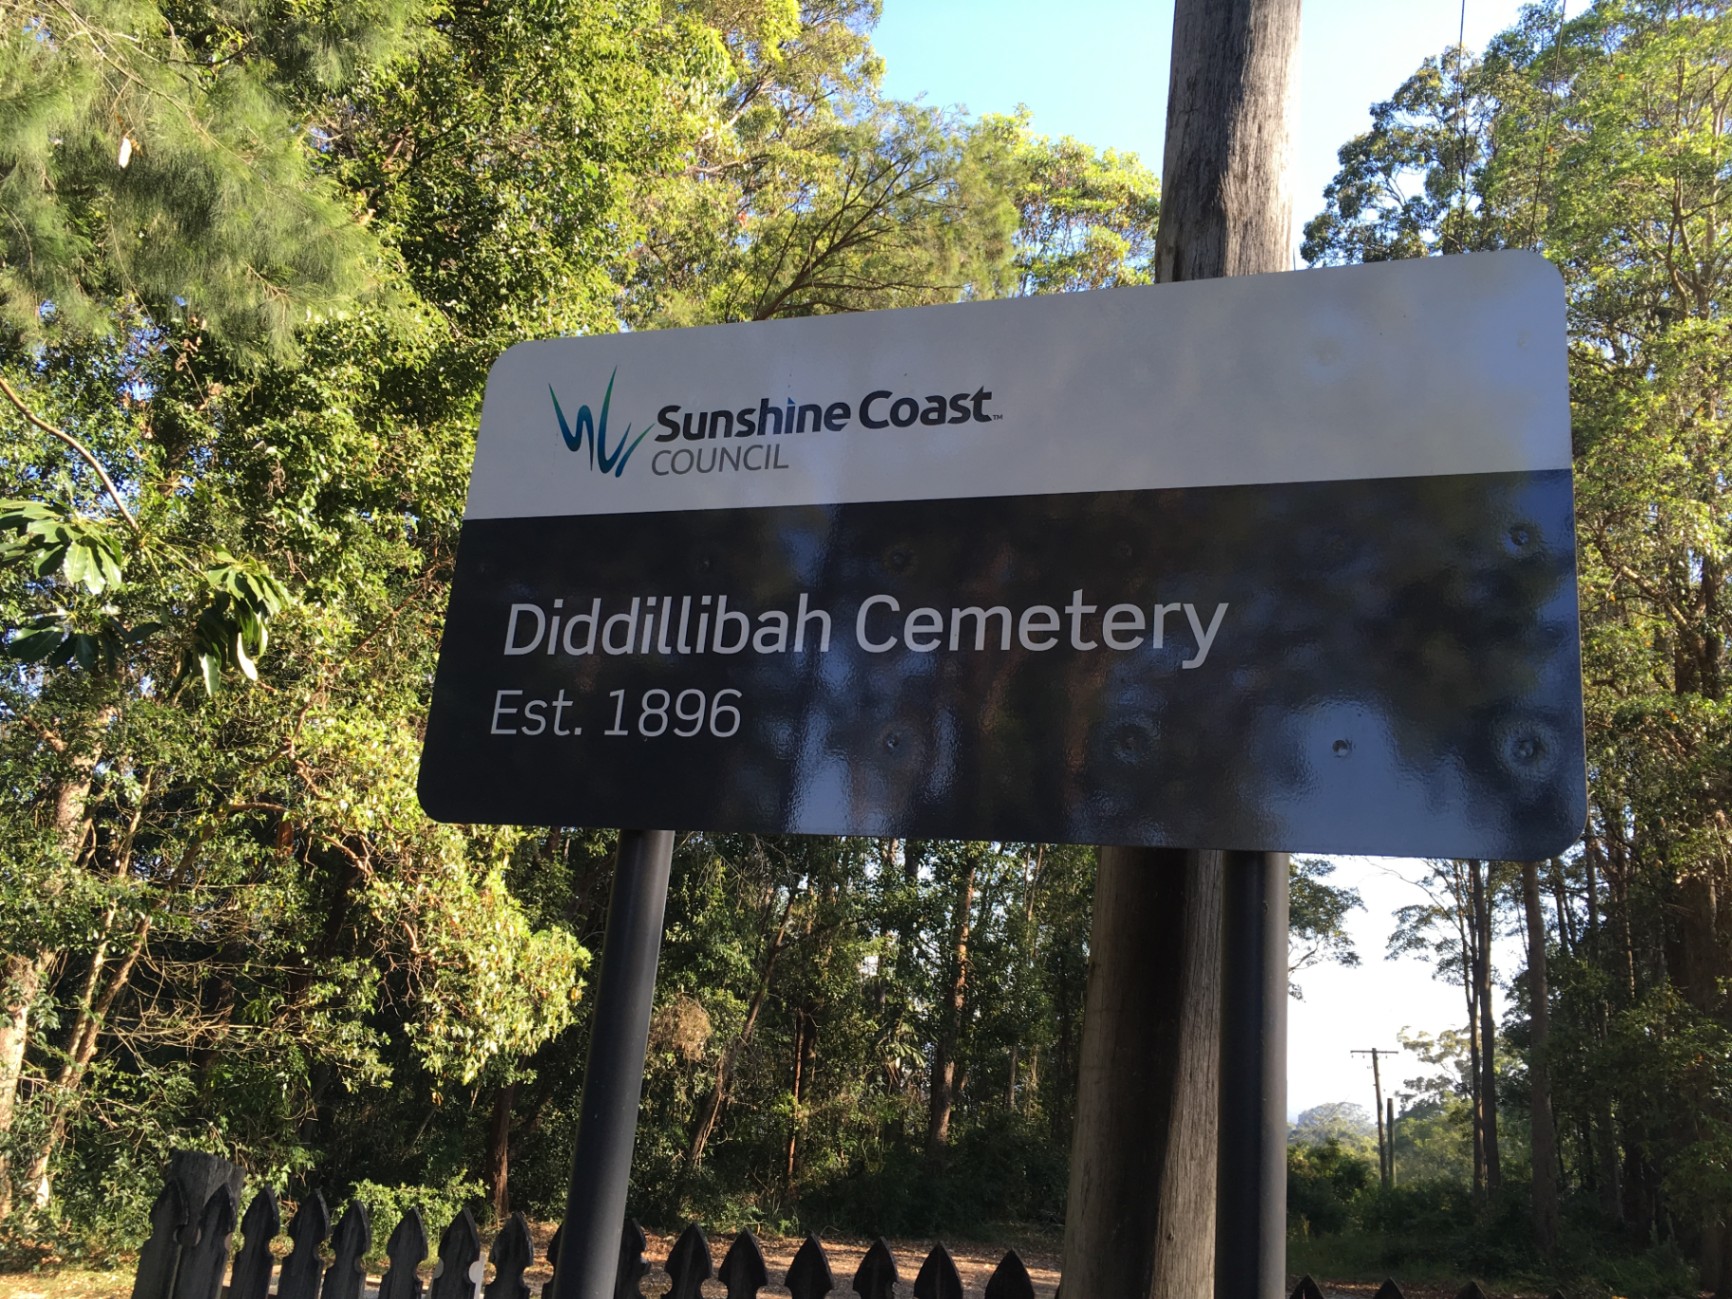 Diddillibah Cemetery